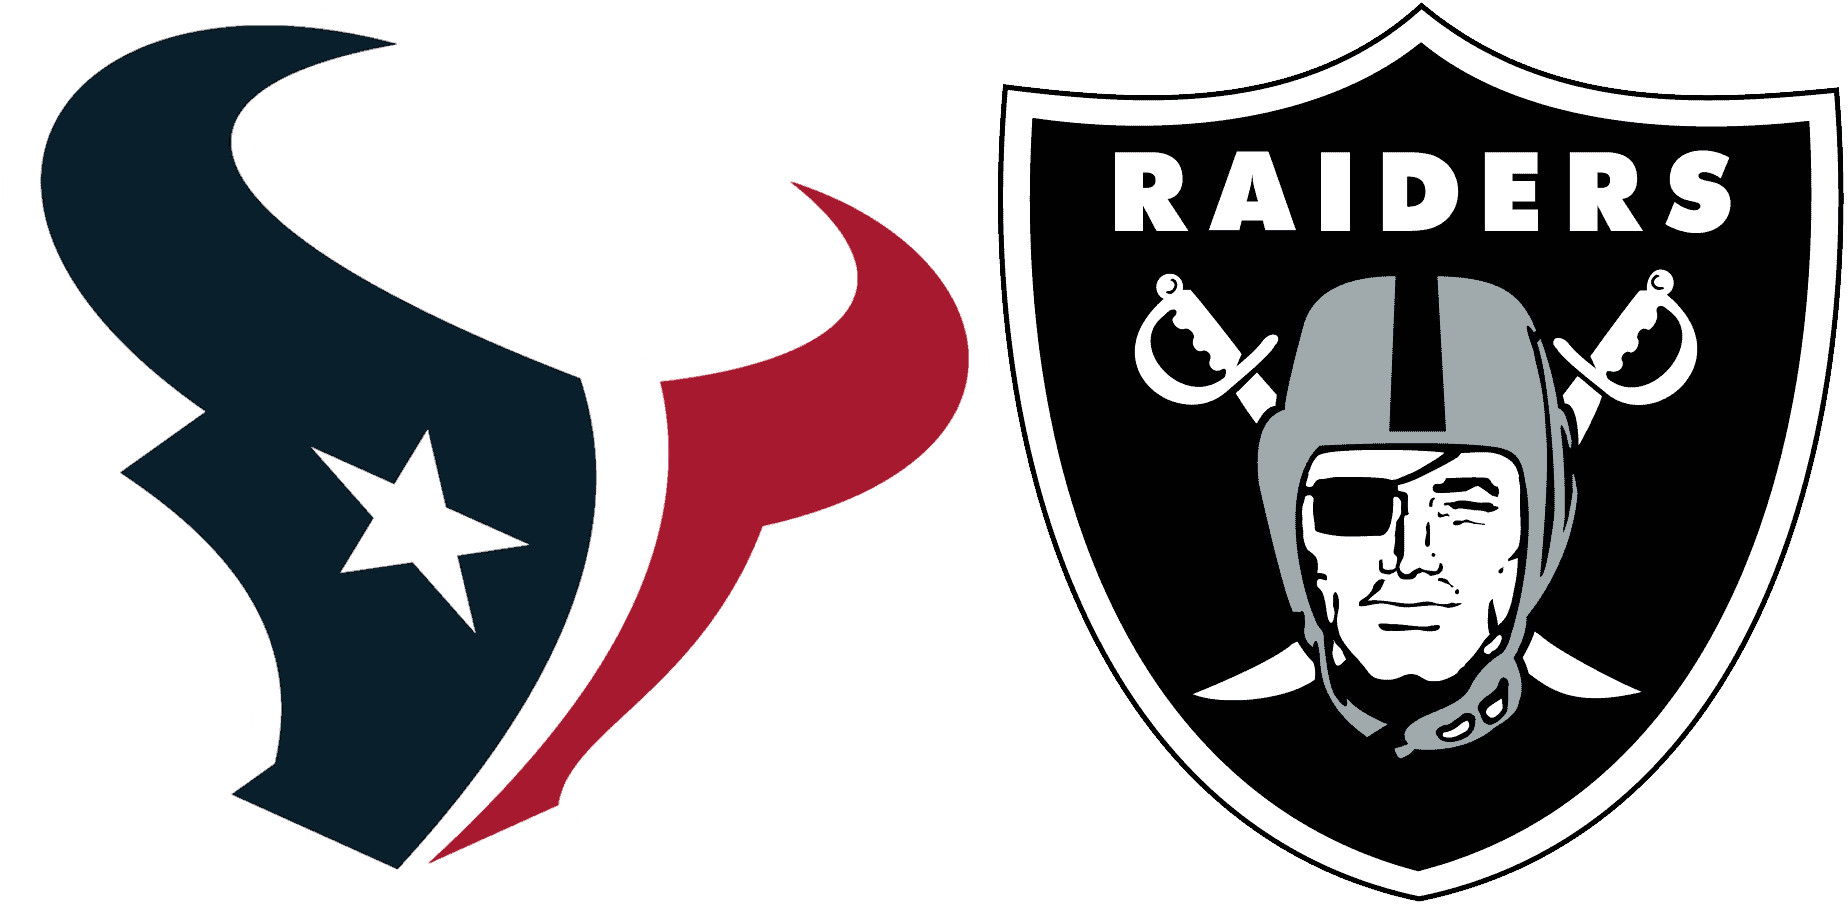 Houston Texans and Las Vegas Raiders logos